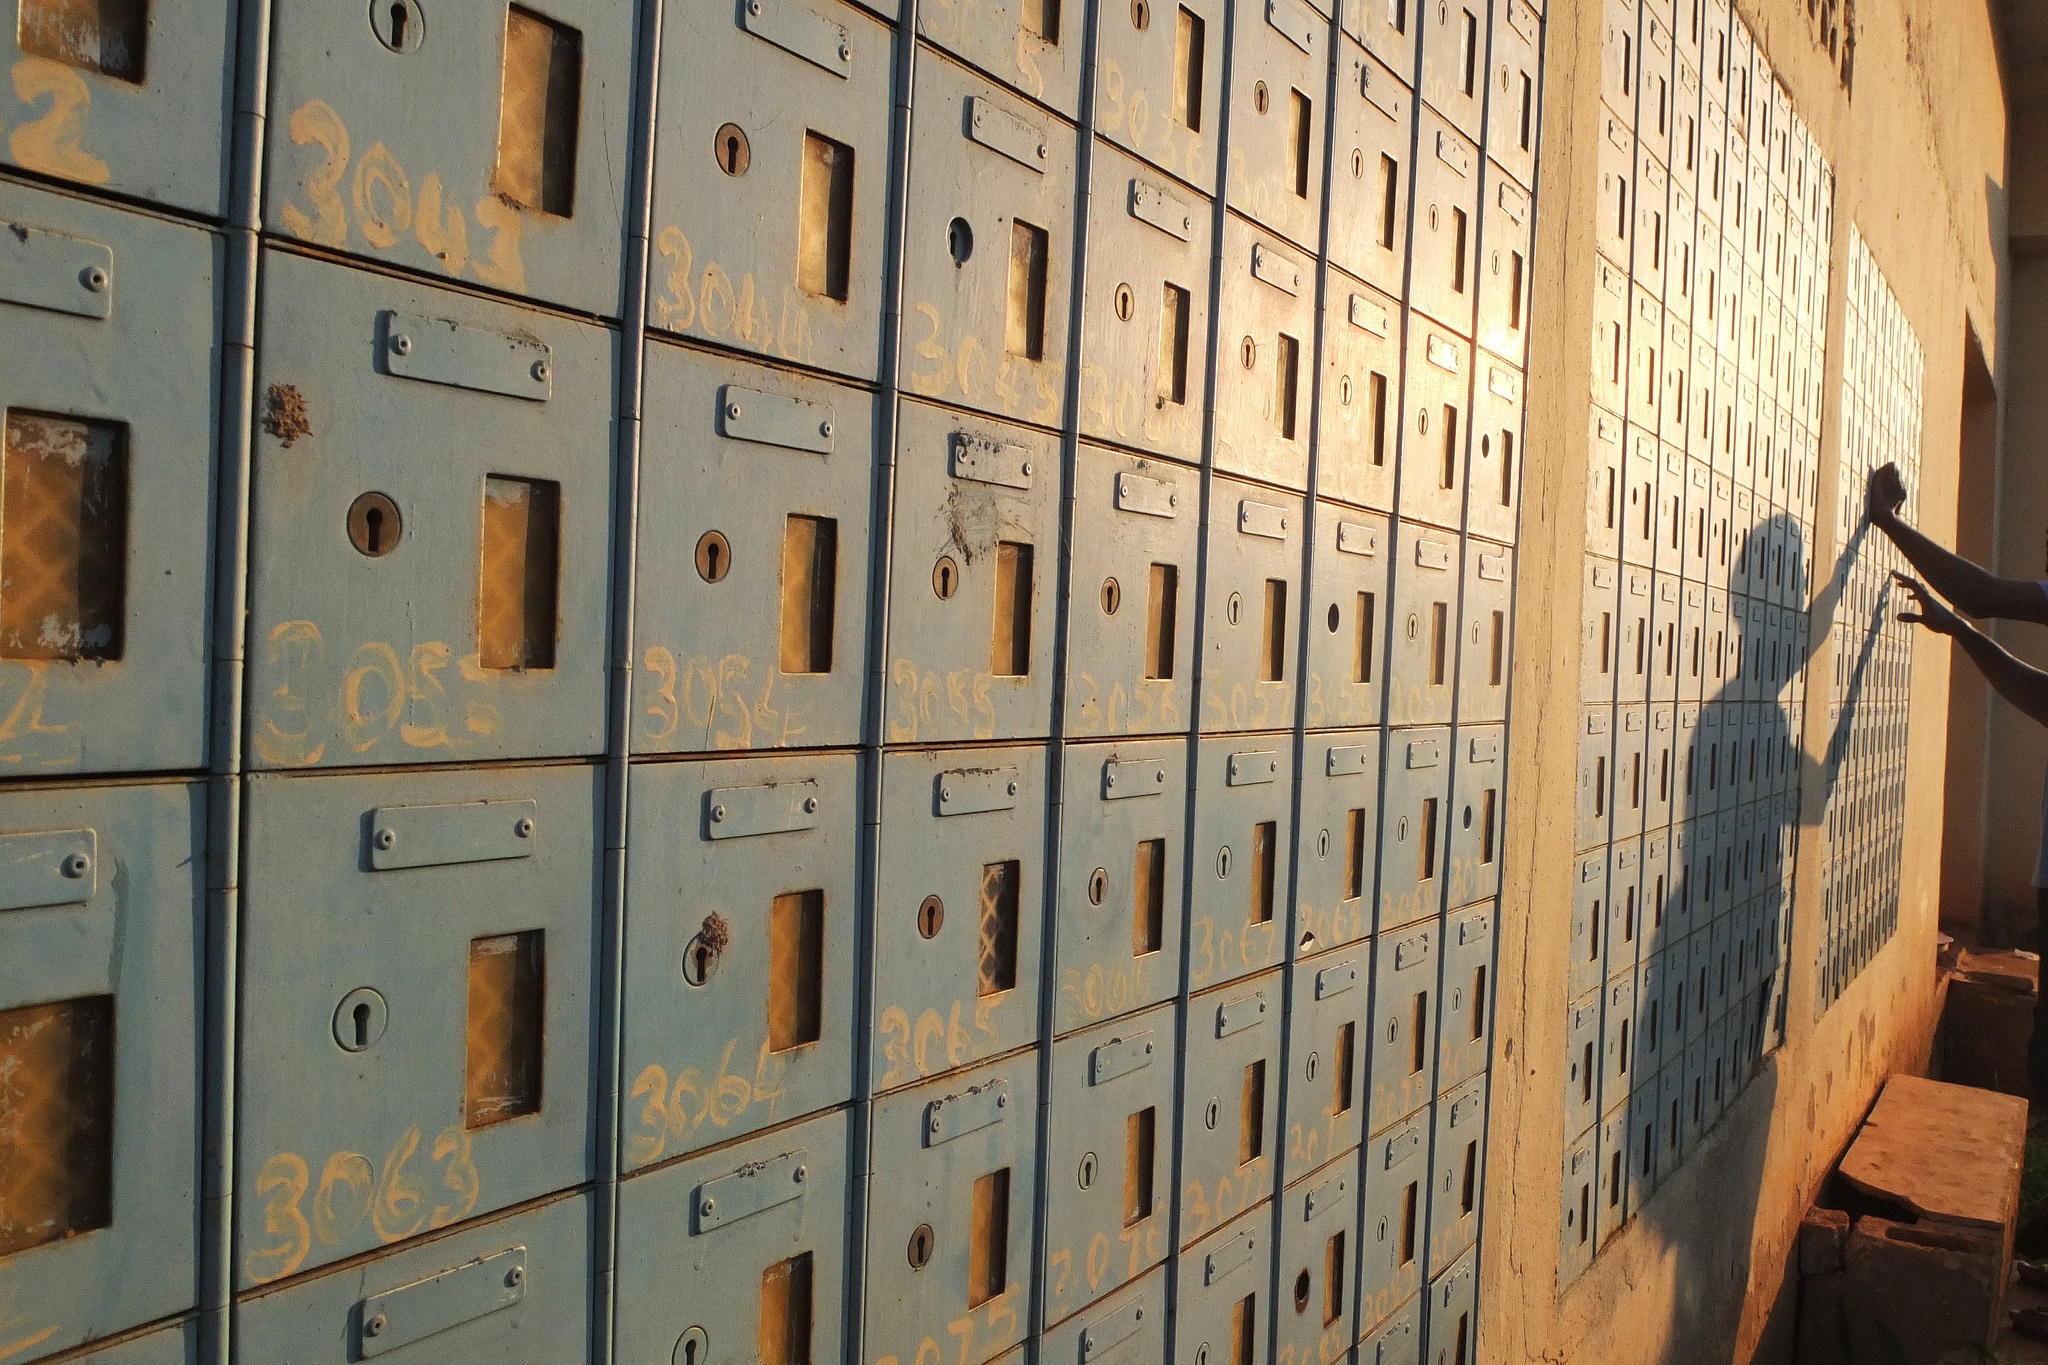 Post office in Nigeria